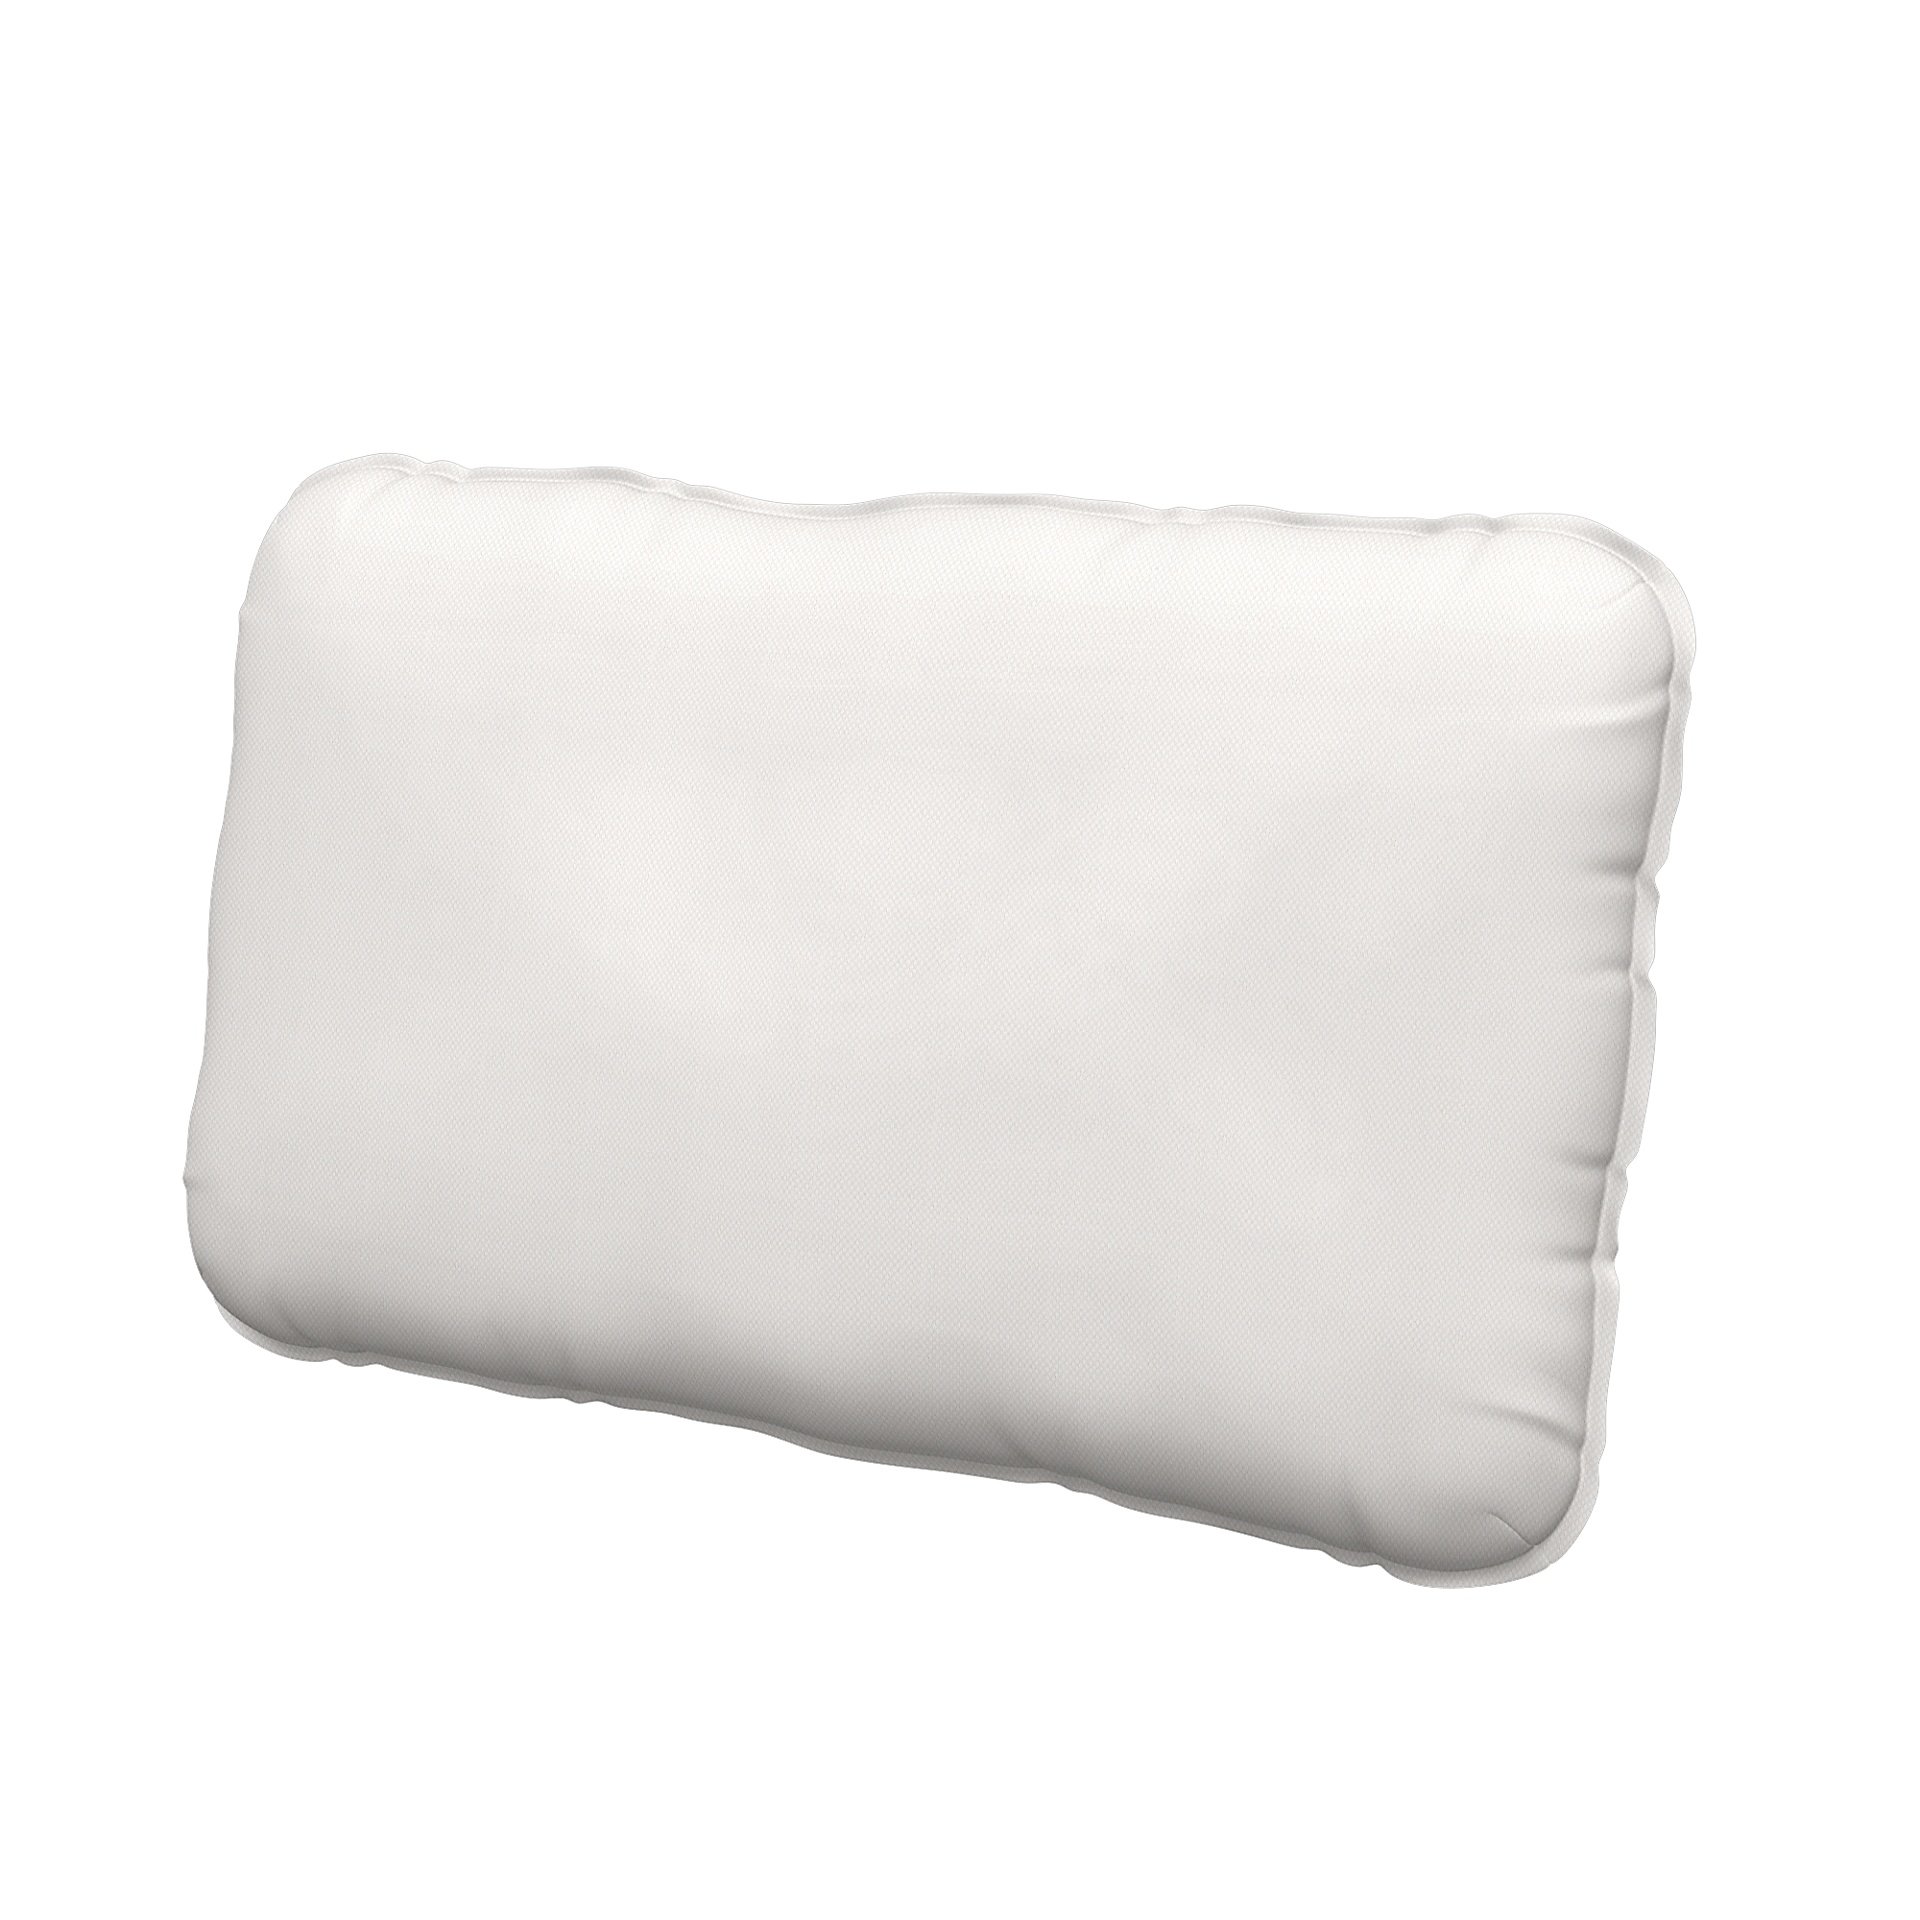 IKEA - Vallentuna back cushion cover 40x75cm, Soft White, Linen - Bemz